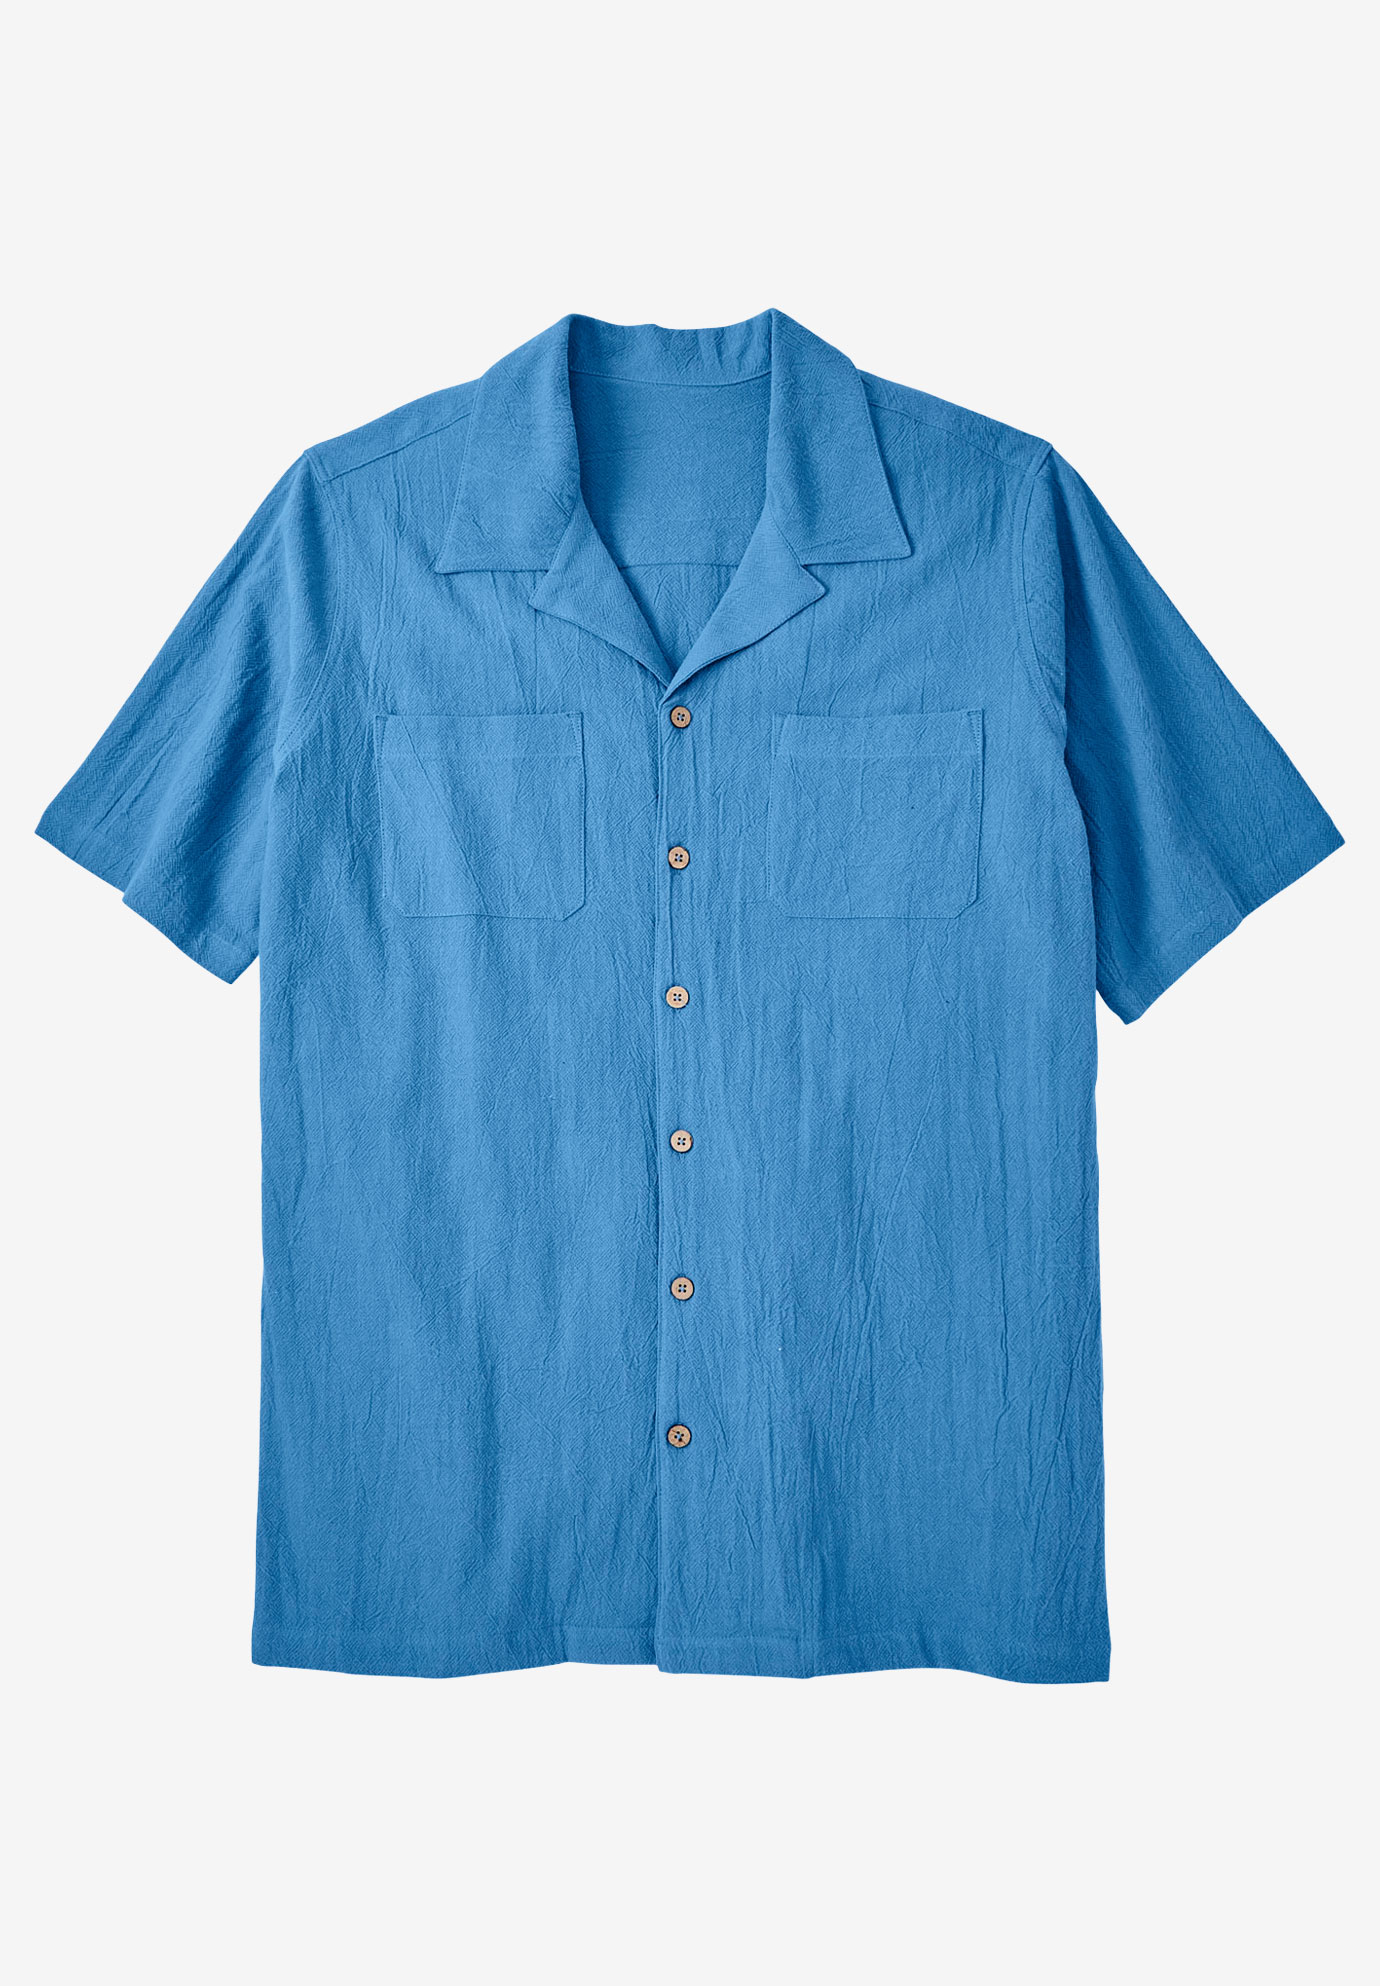 Gauze Cotton Camp Shirt| Big and Tall Camp Shirts | King Size